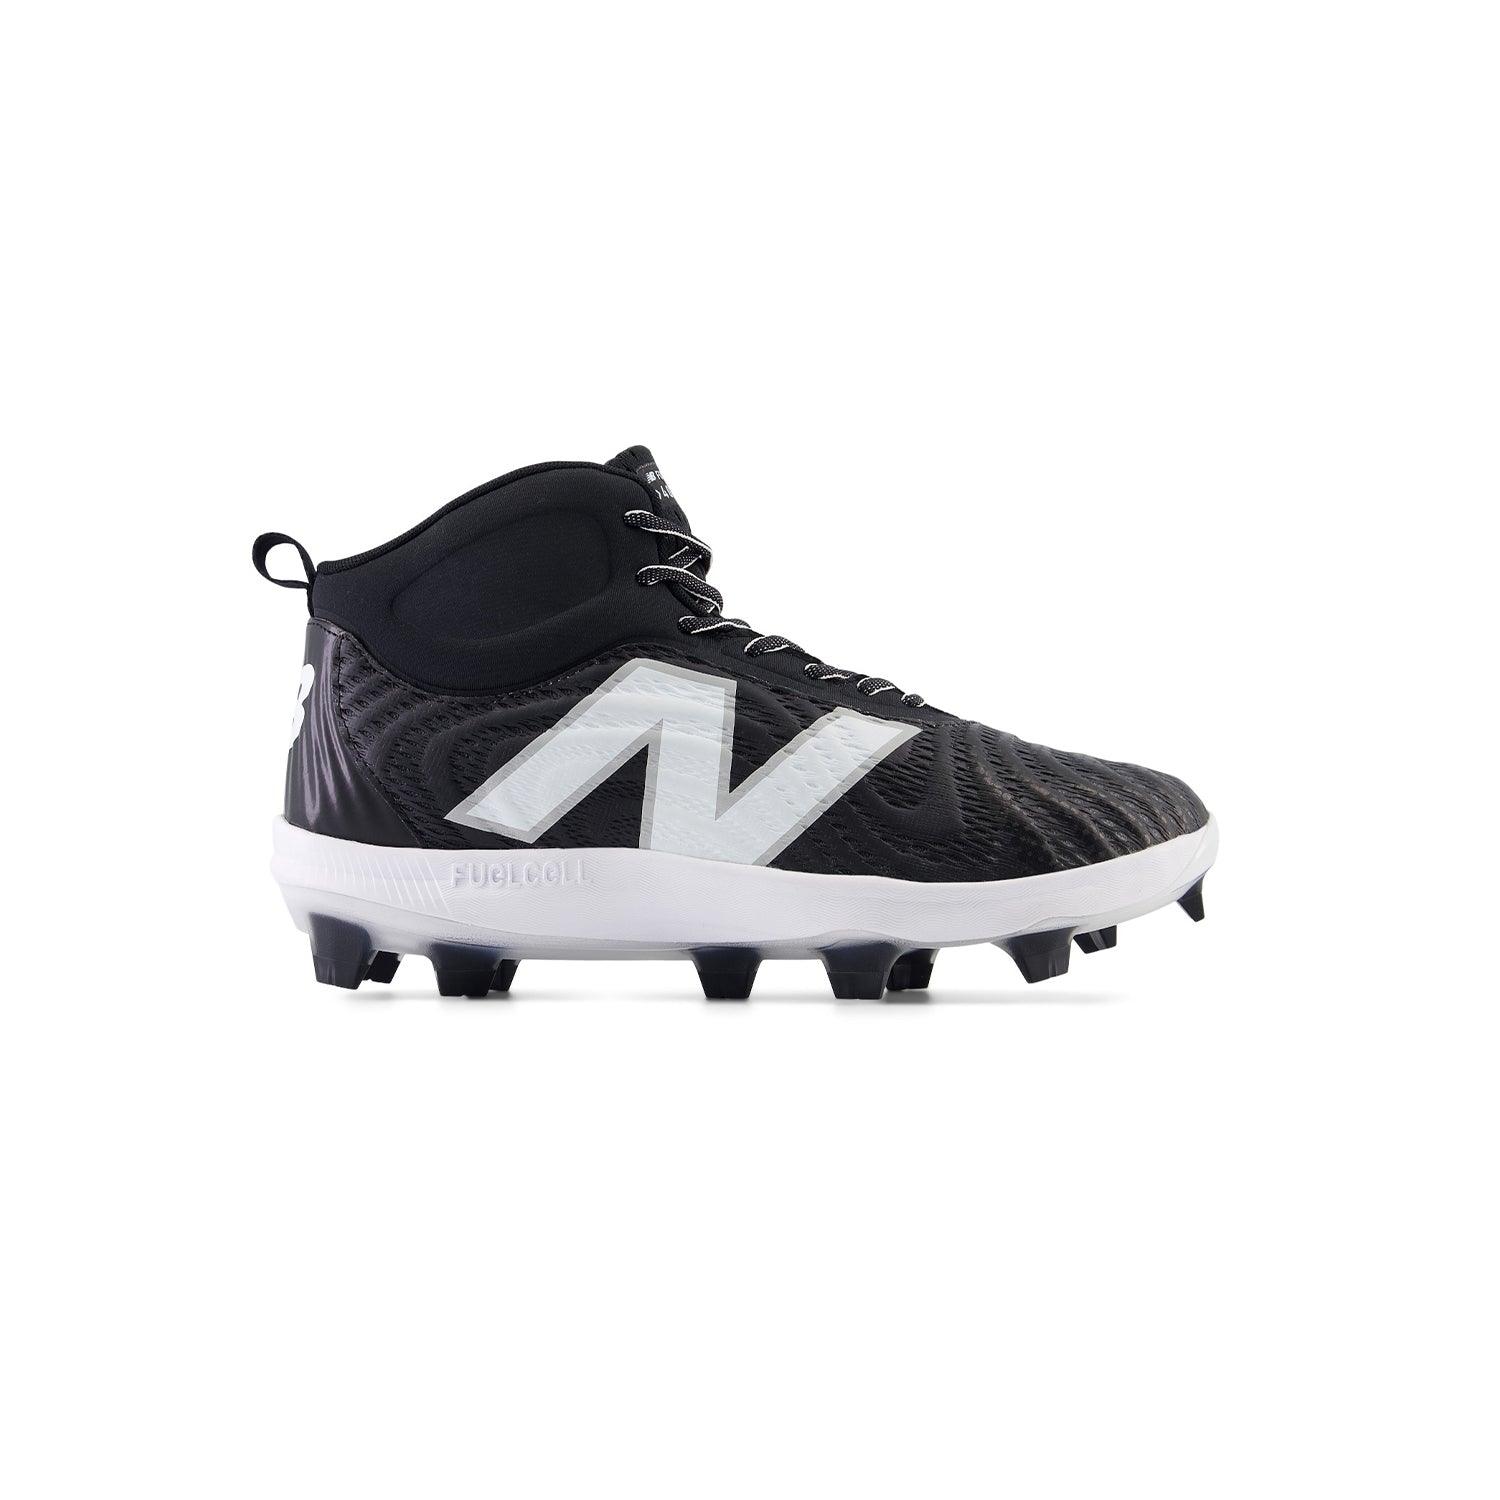 New Balance Men's FuelCell 4040 V7 Mid-Molded Baseball Cleats - Black / Optic White - PM4040K7 - Smash It Sports